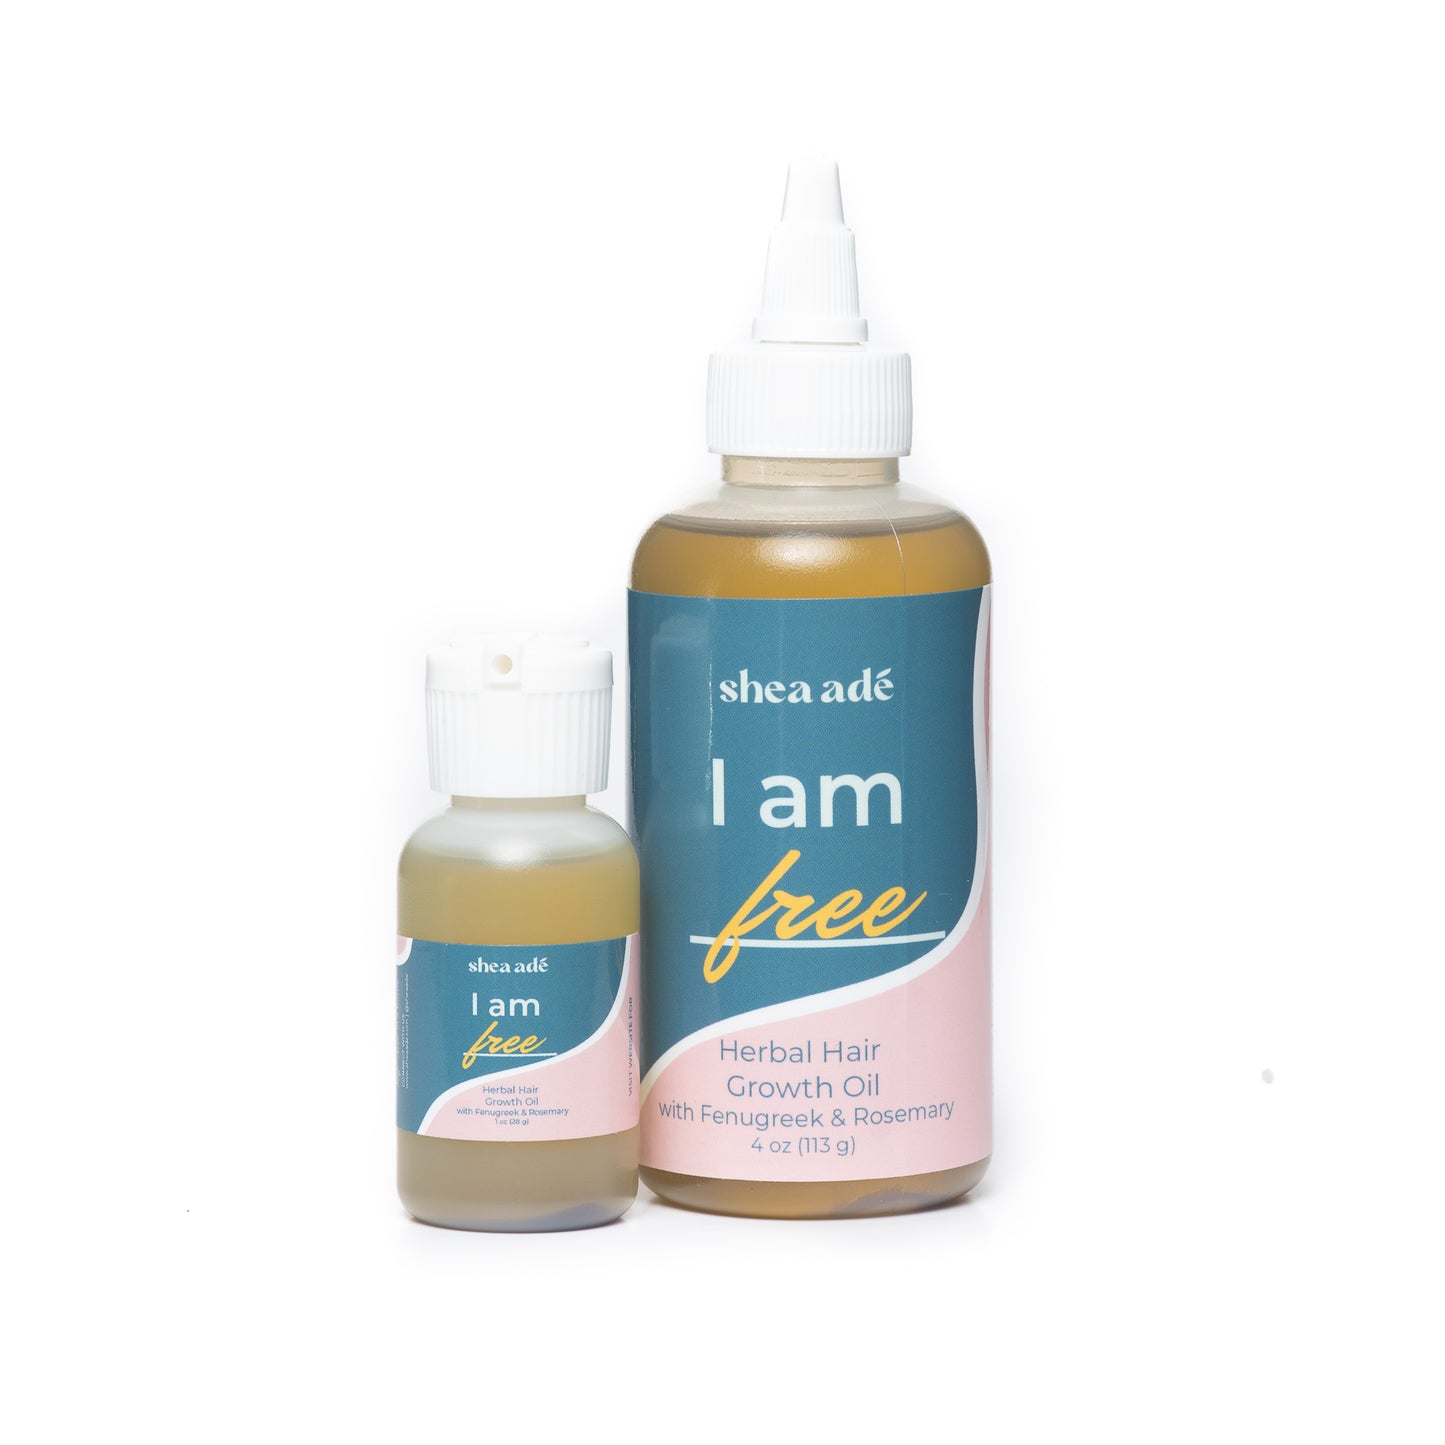 "I am free!" Herbal Hair Growth Oil